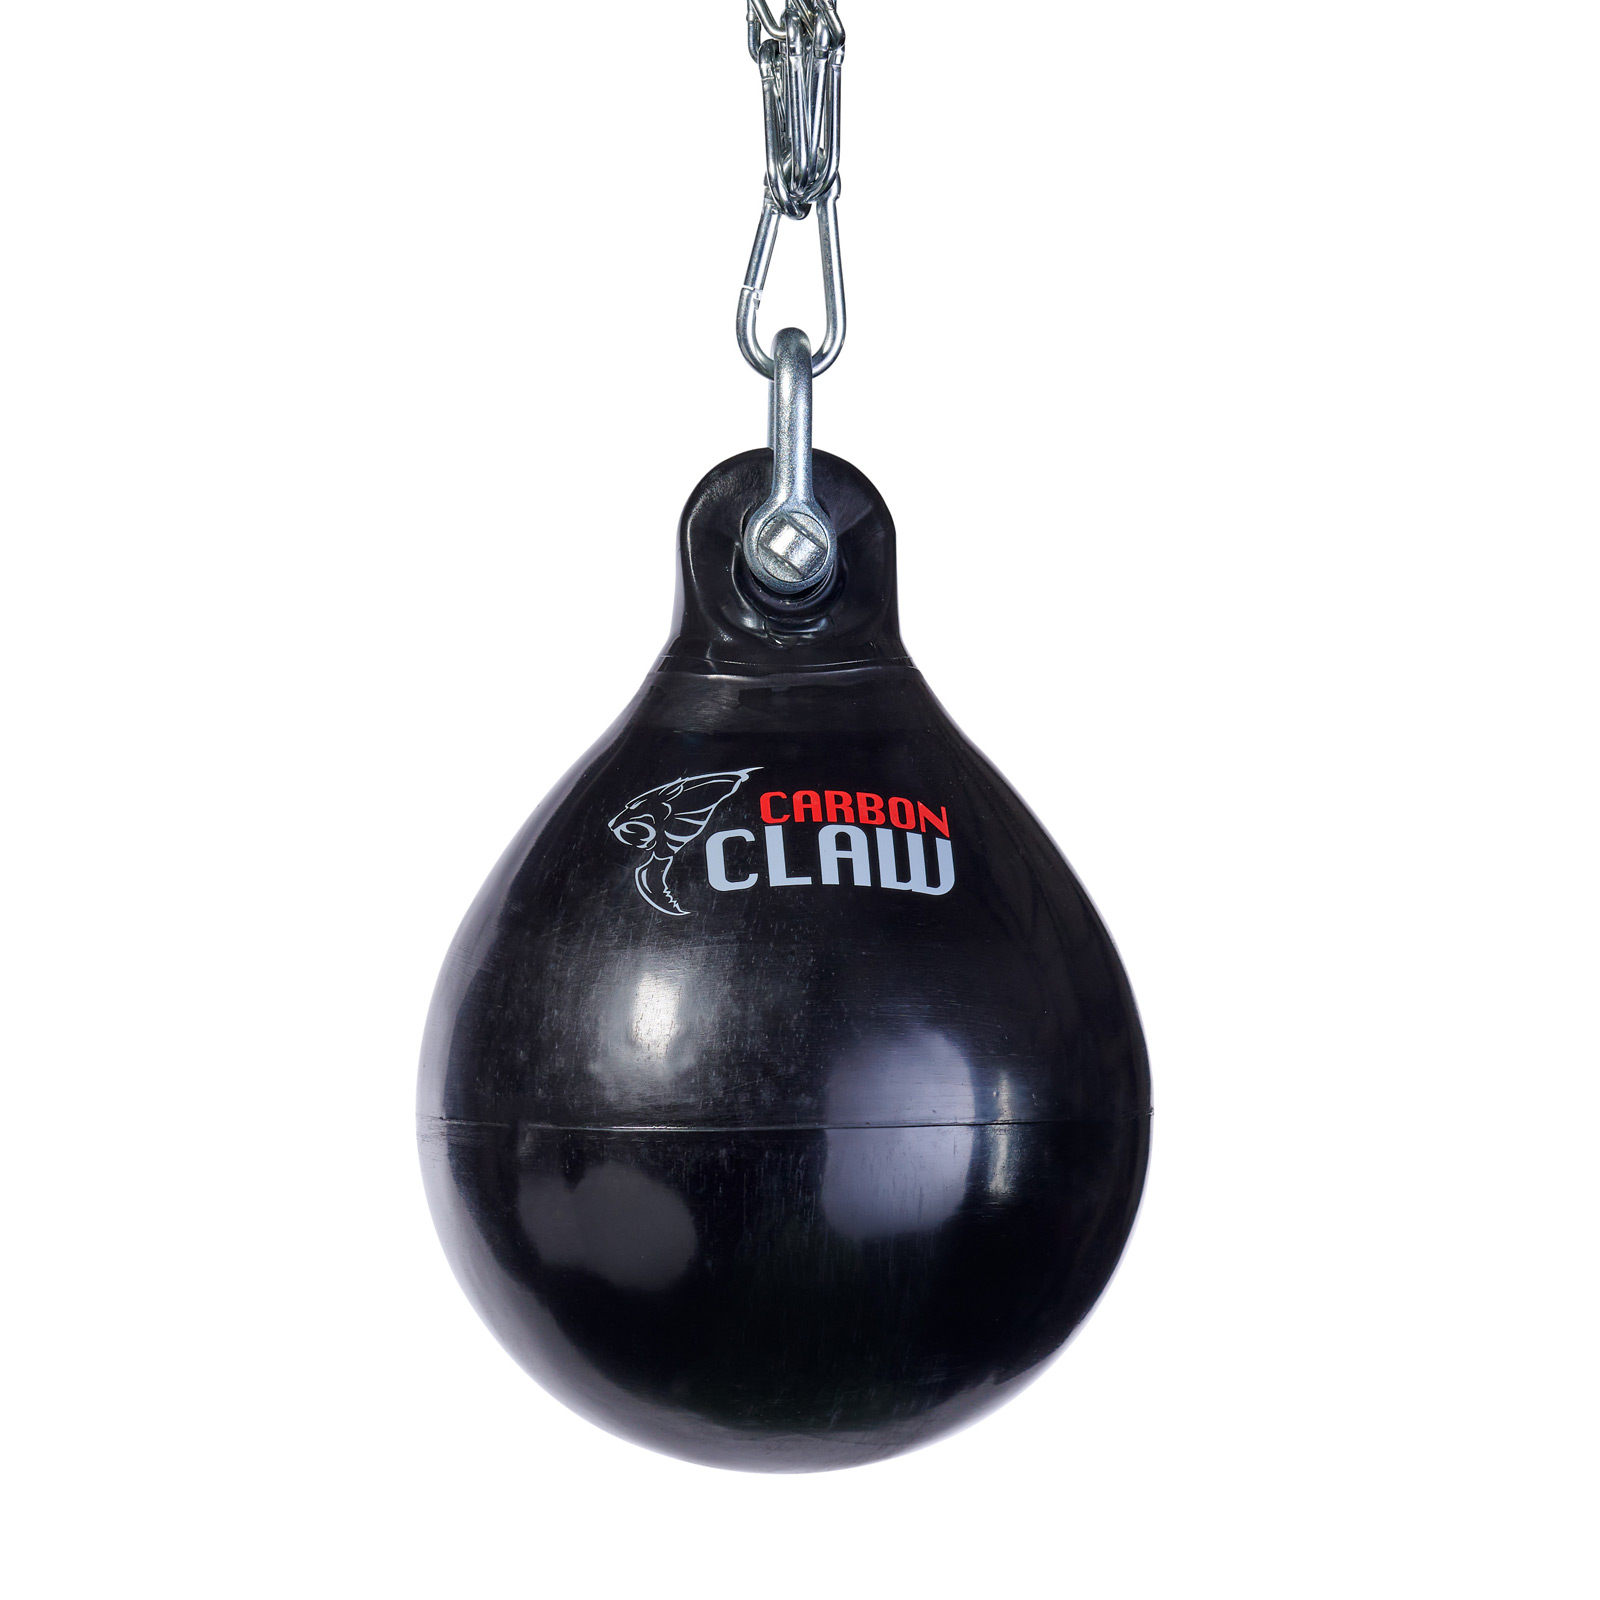 Water Boxing Bags - Durable & Versatile Water Punching Bags